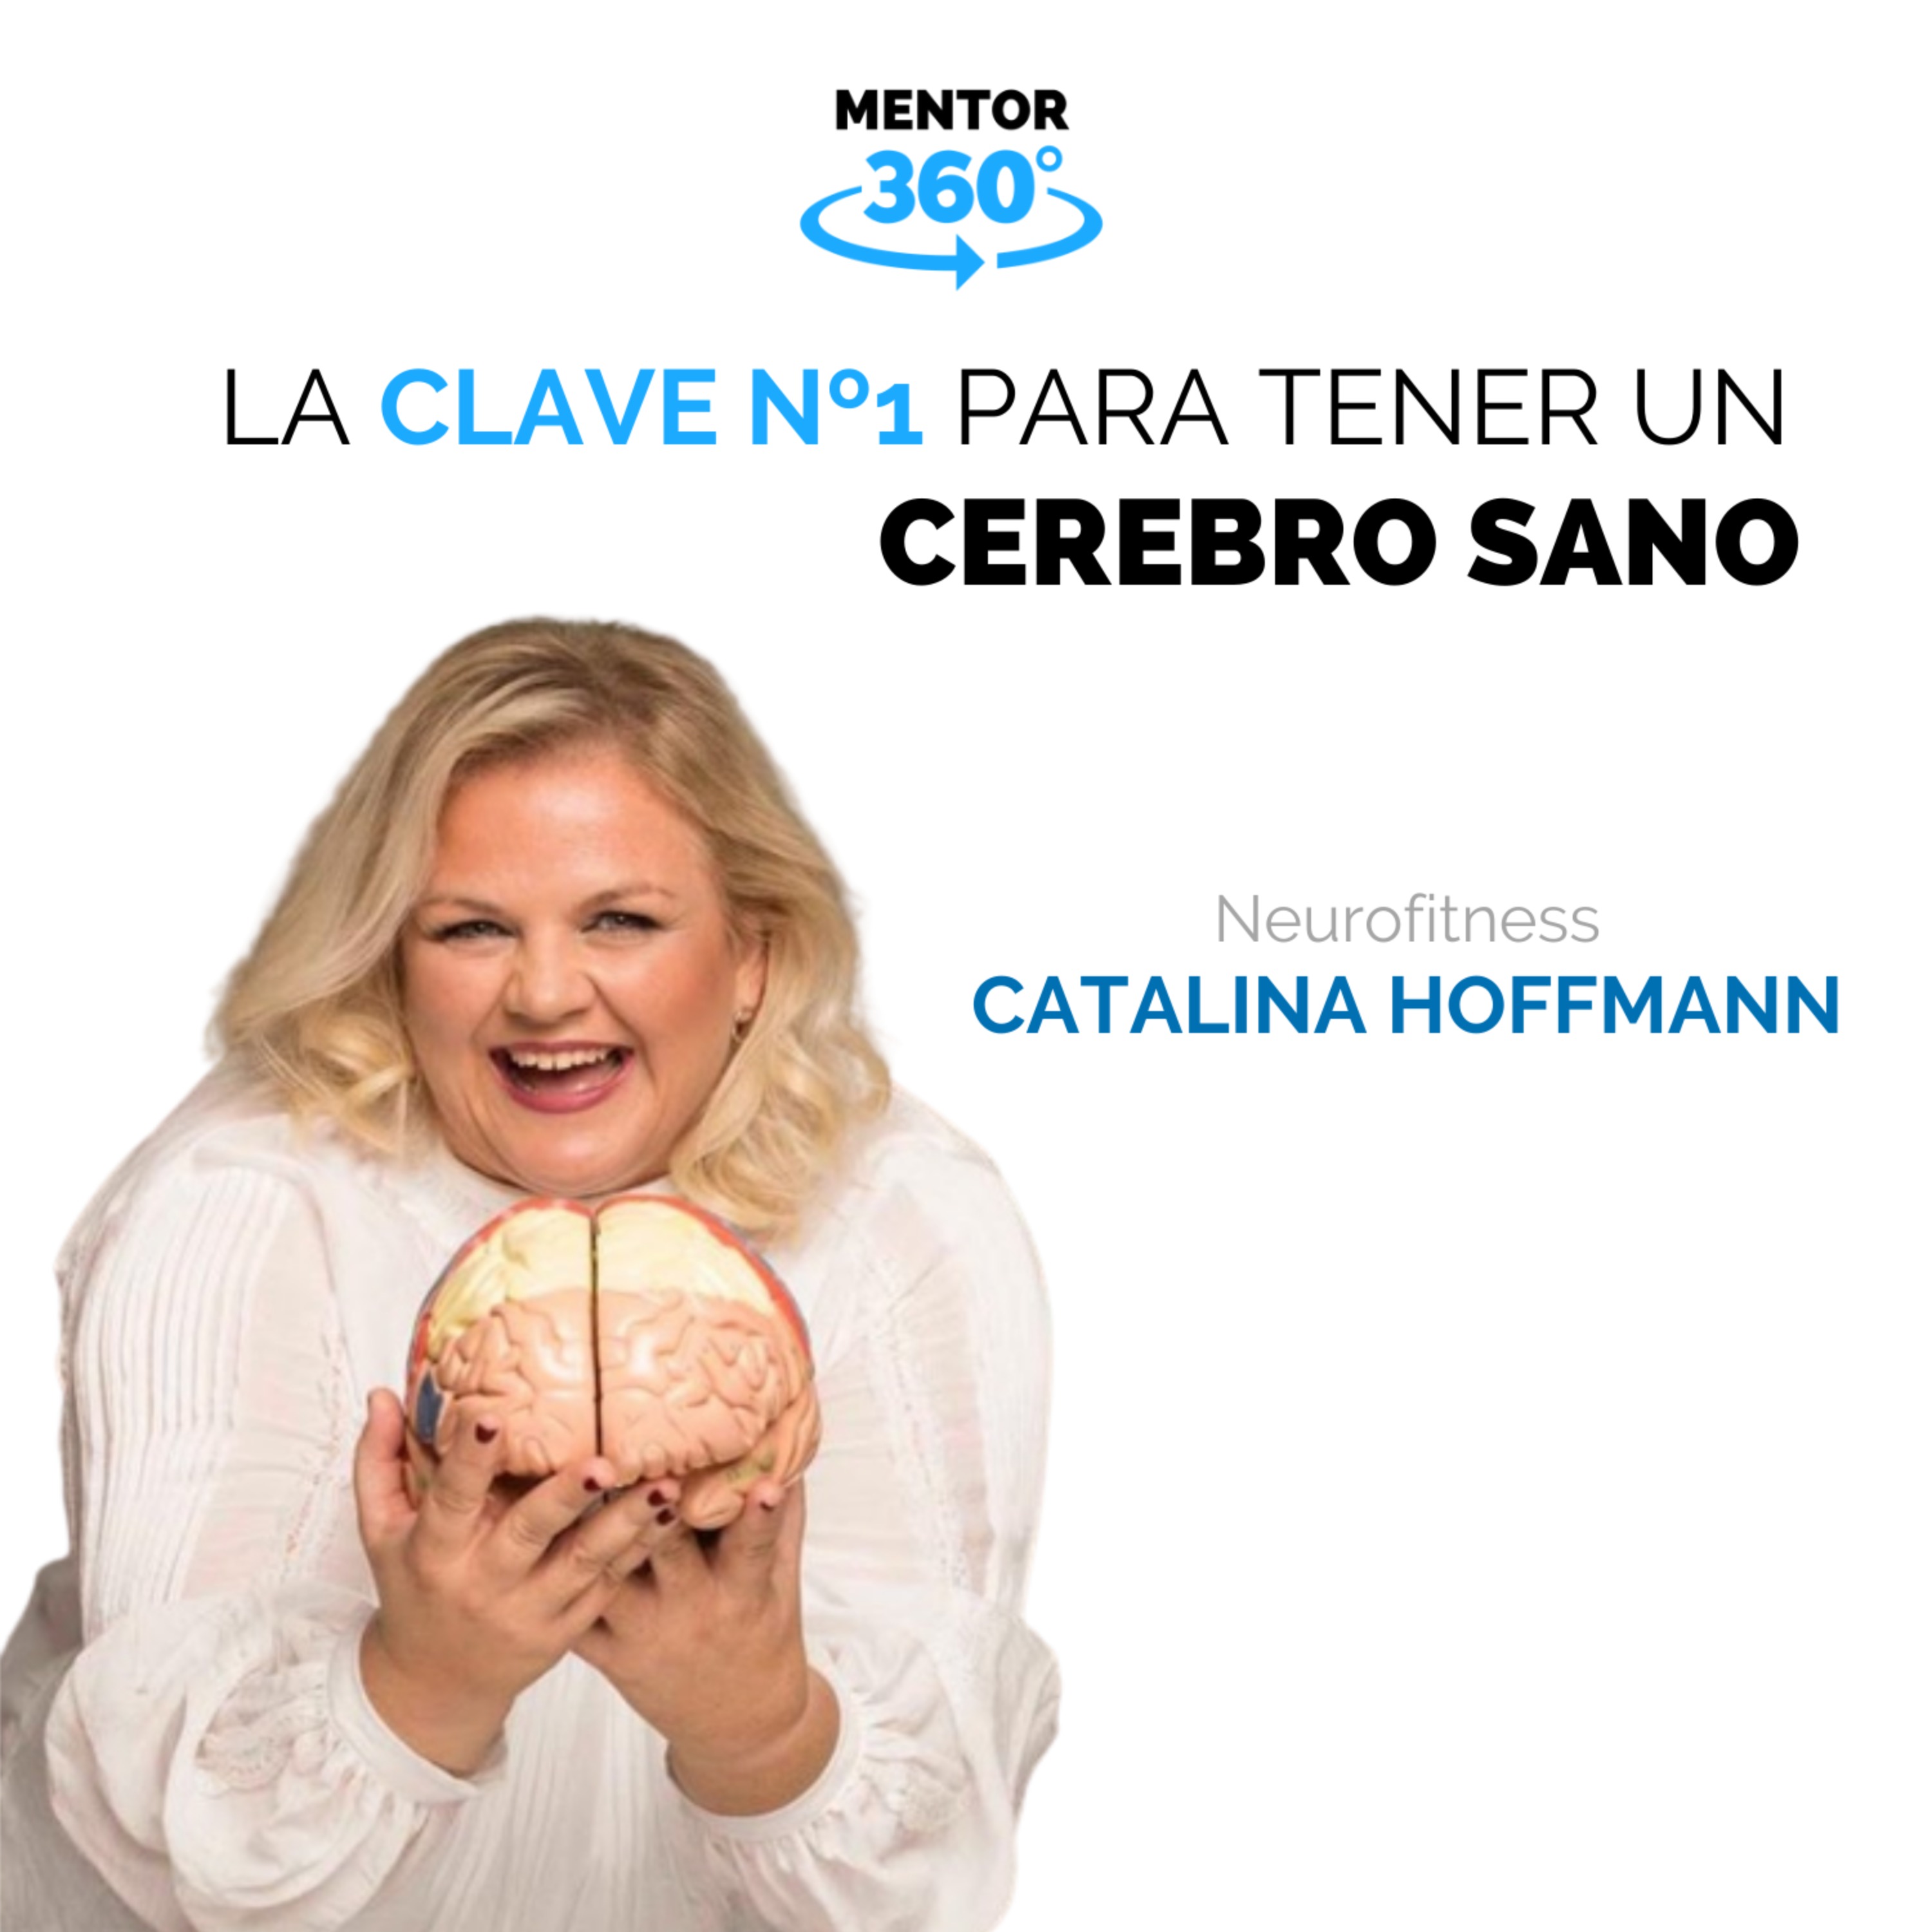 La Clave Nº 1 Para Tener Un Cerebro Sano - Neurofitness - Catalina Hoffmann - MENTOR360